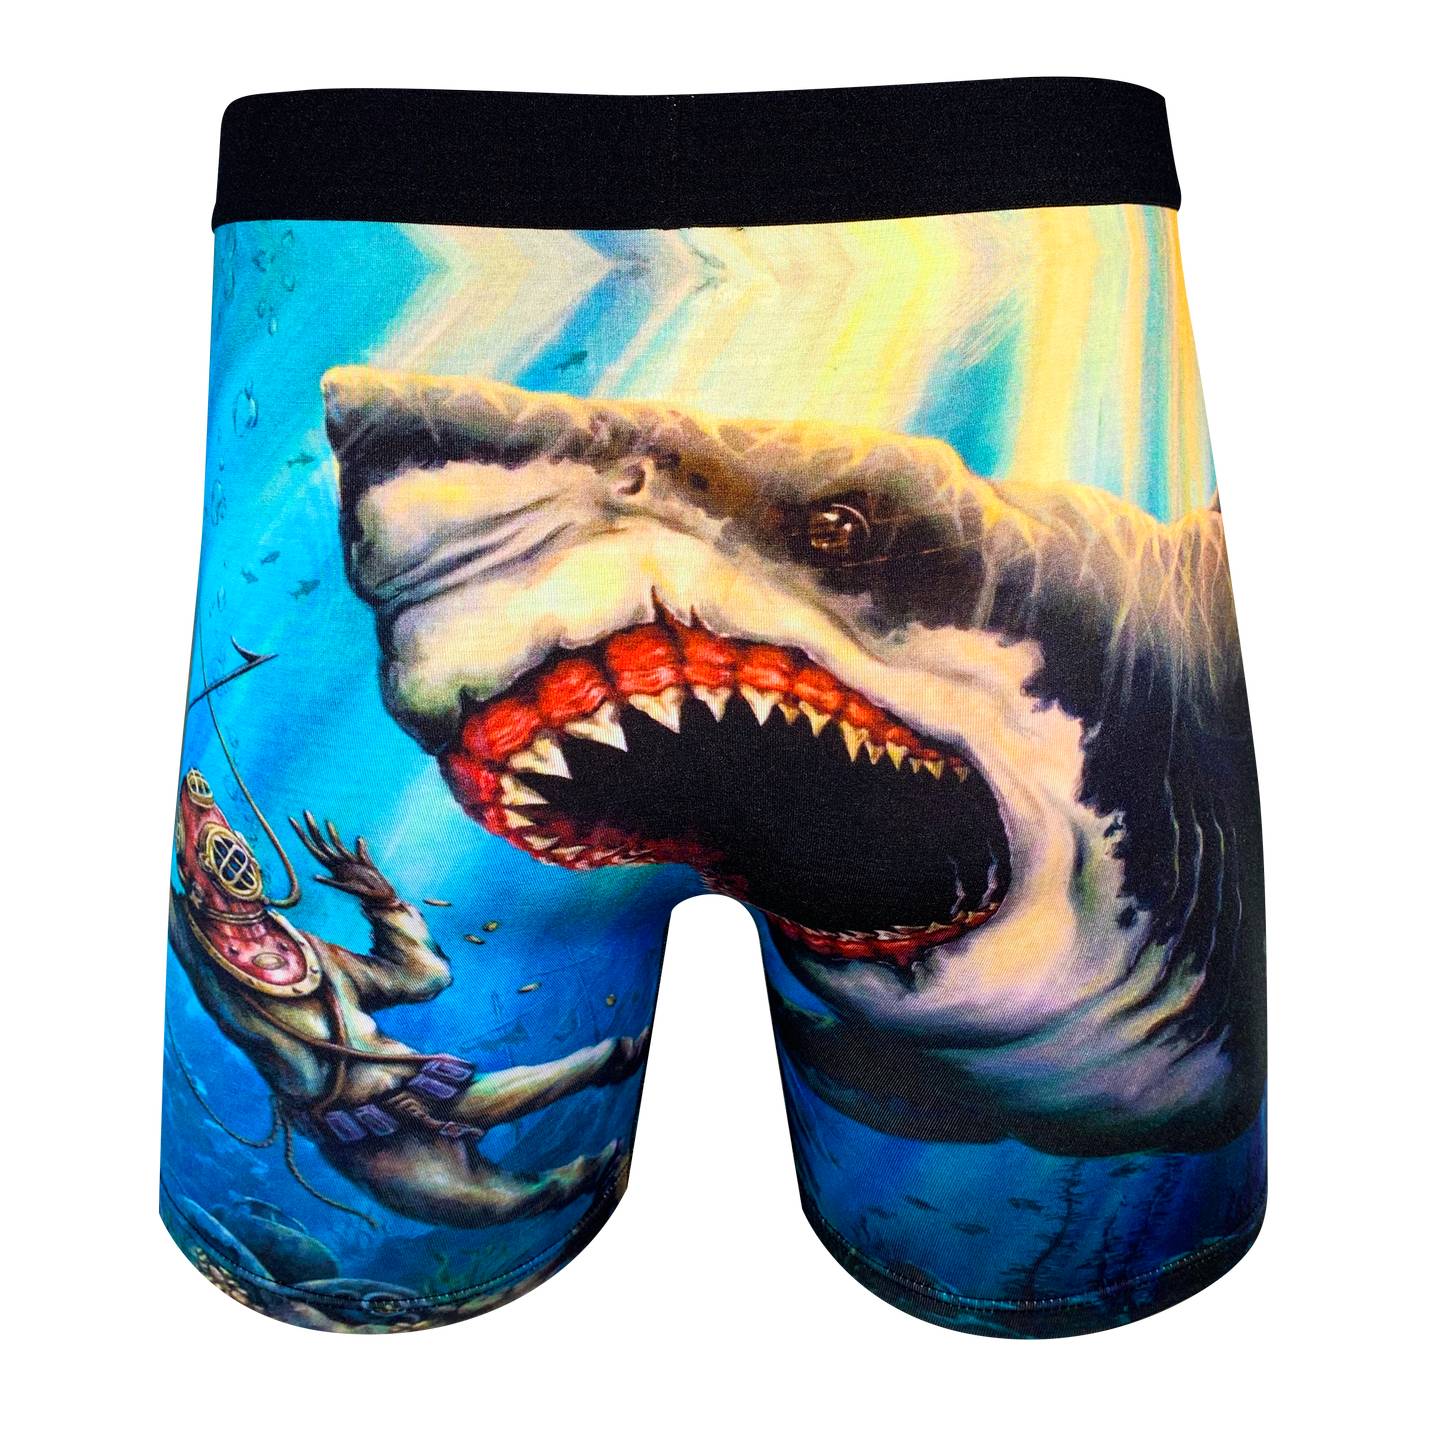 Men's Shark Boxer Briefs Modal Underwear Fun Gitch Groom Gifts Sweat Proof  Comfortable Undies Funky Gifts for Men Him 